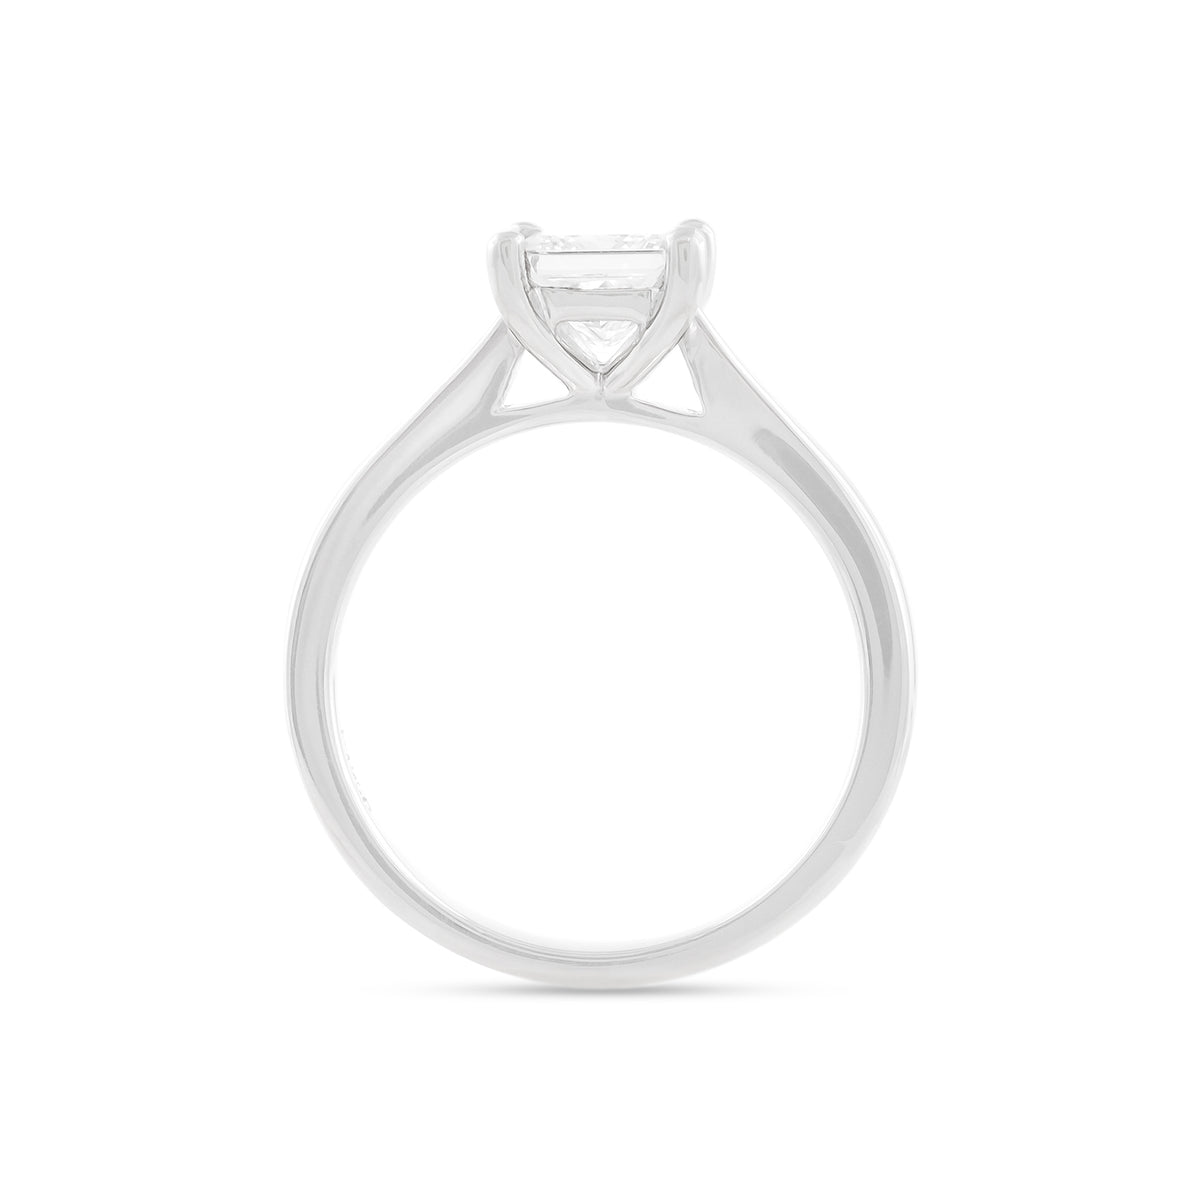 1.01ct Princess-Cut Diamond Solitaire Engagement Ring